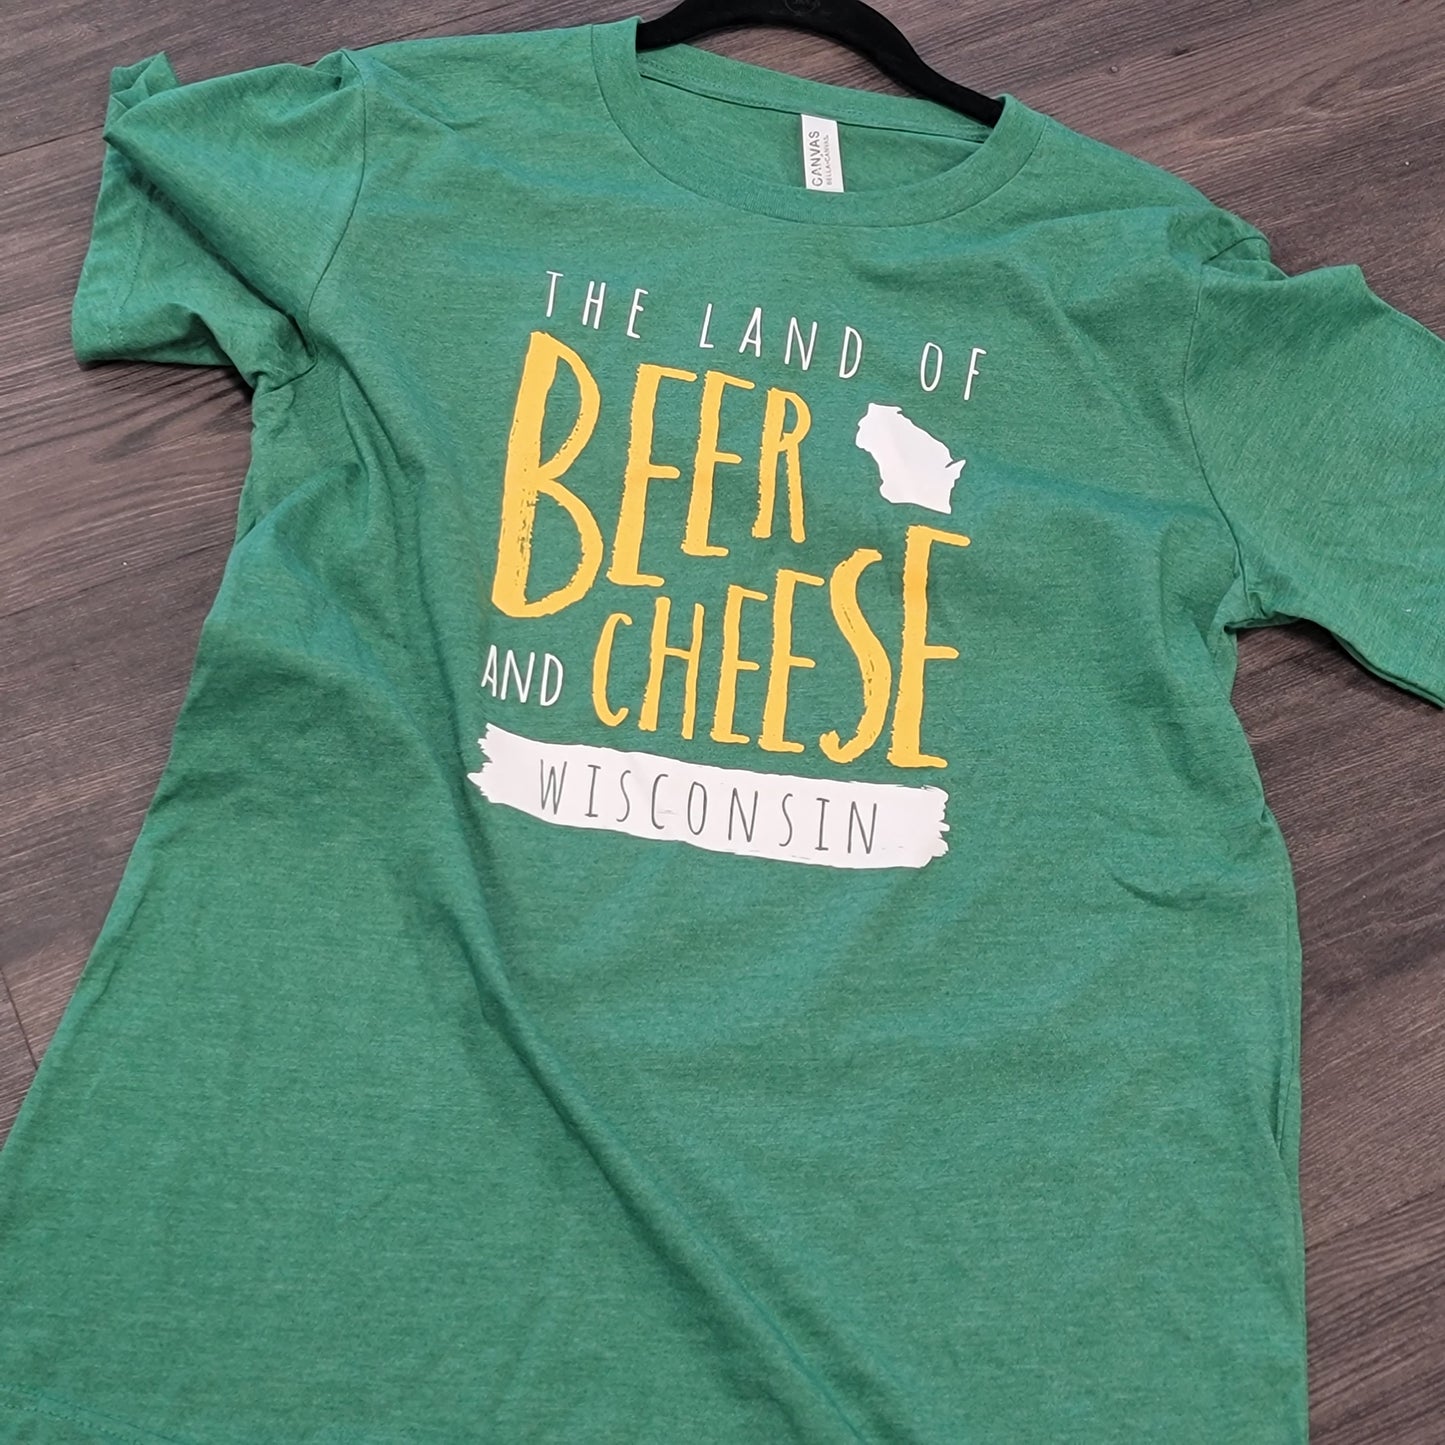 Wisconsin Shirt - Unisex - Green